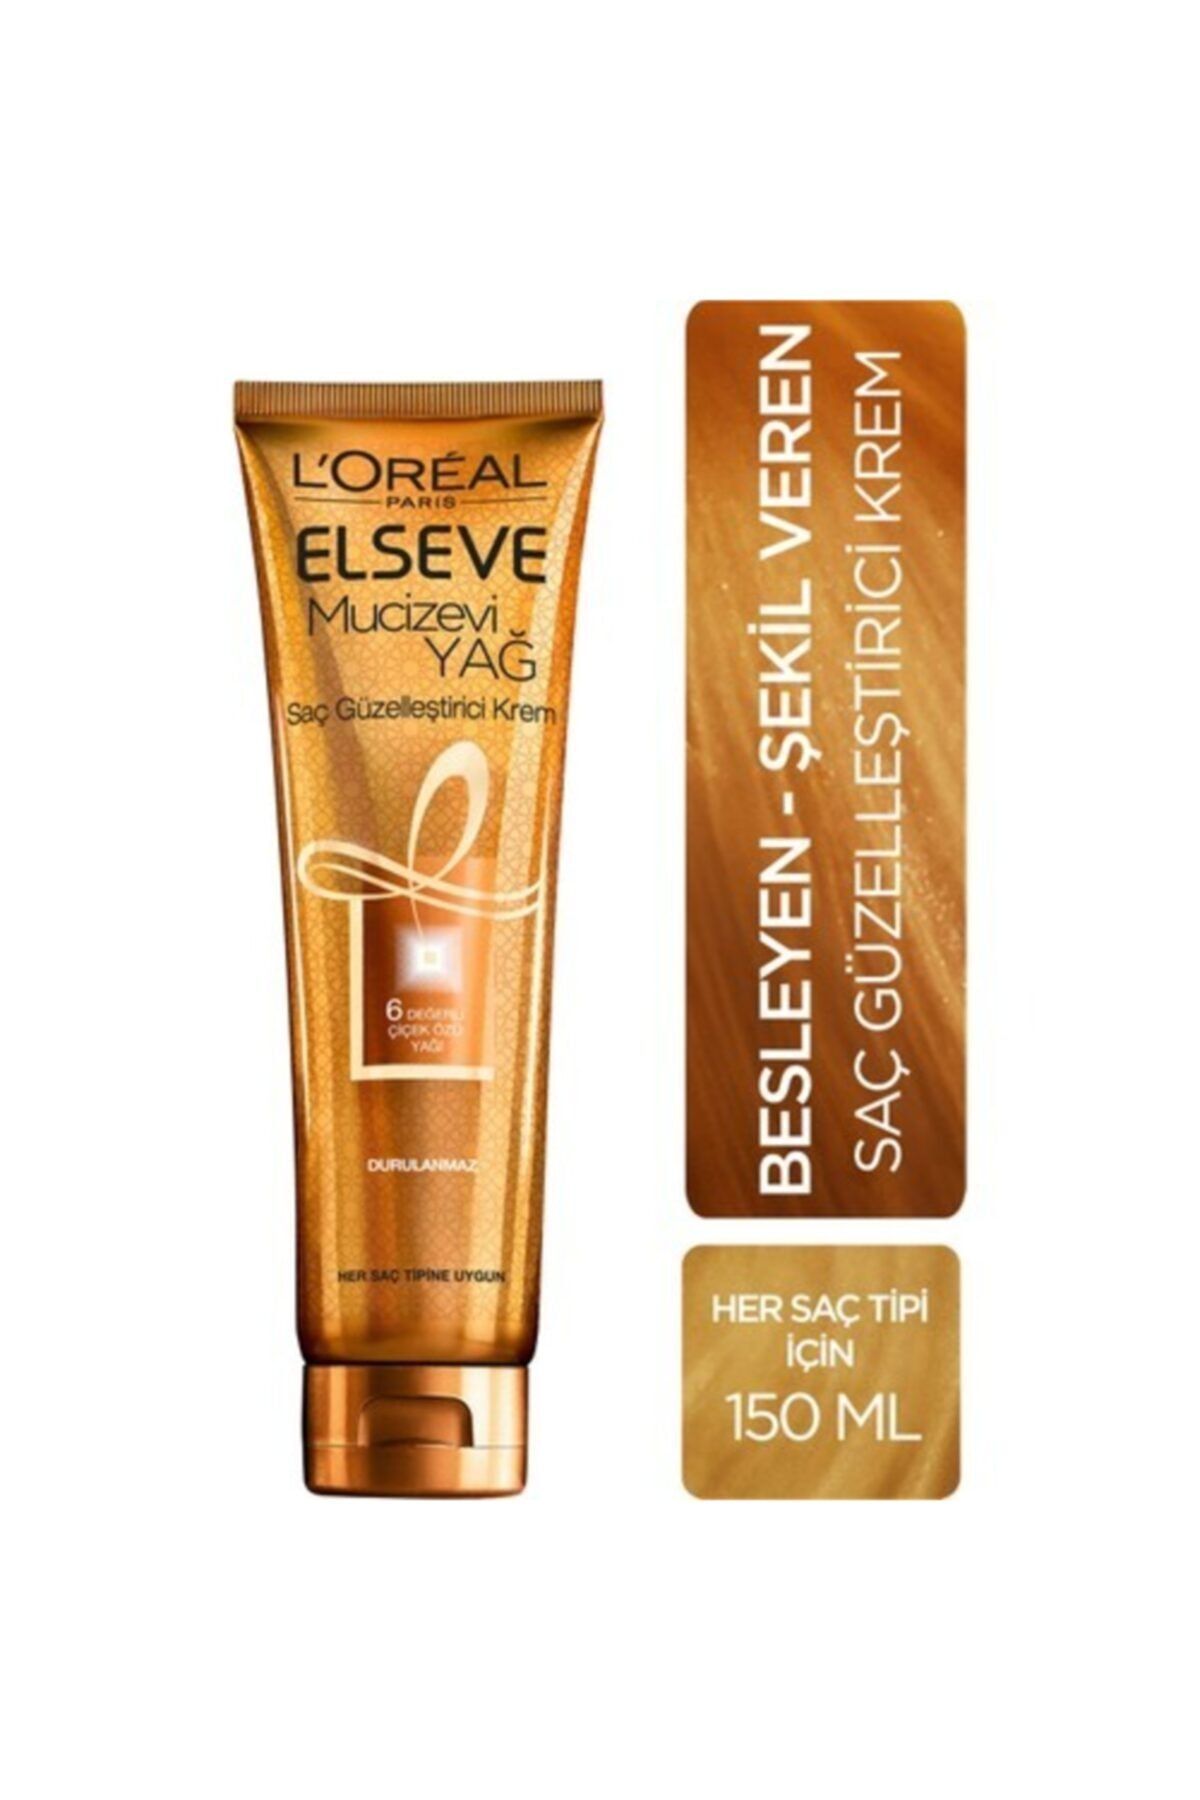 Elseve L'oréal Paris Mucizevi Yağ Saç Güzelleştirici Krem 150 Ml - Her Saç Tipi